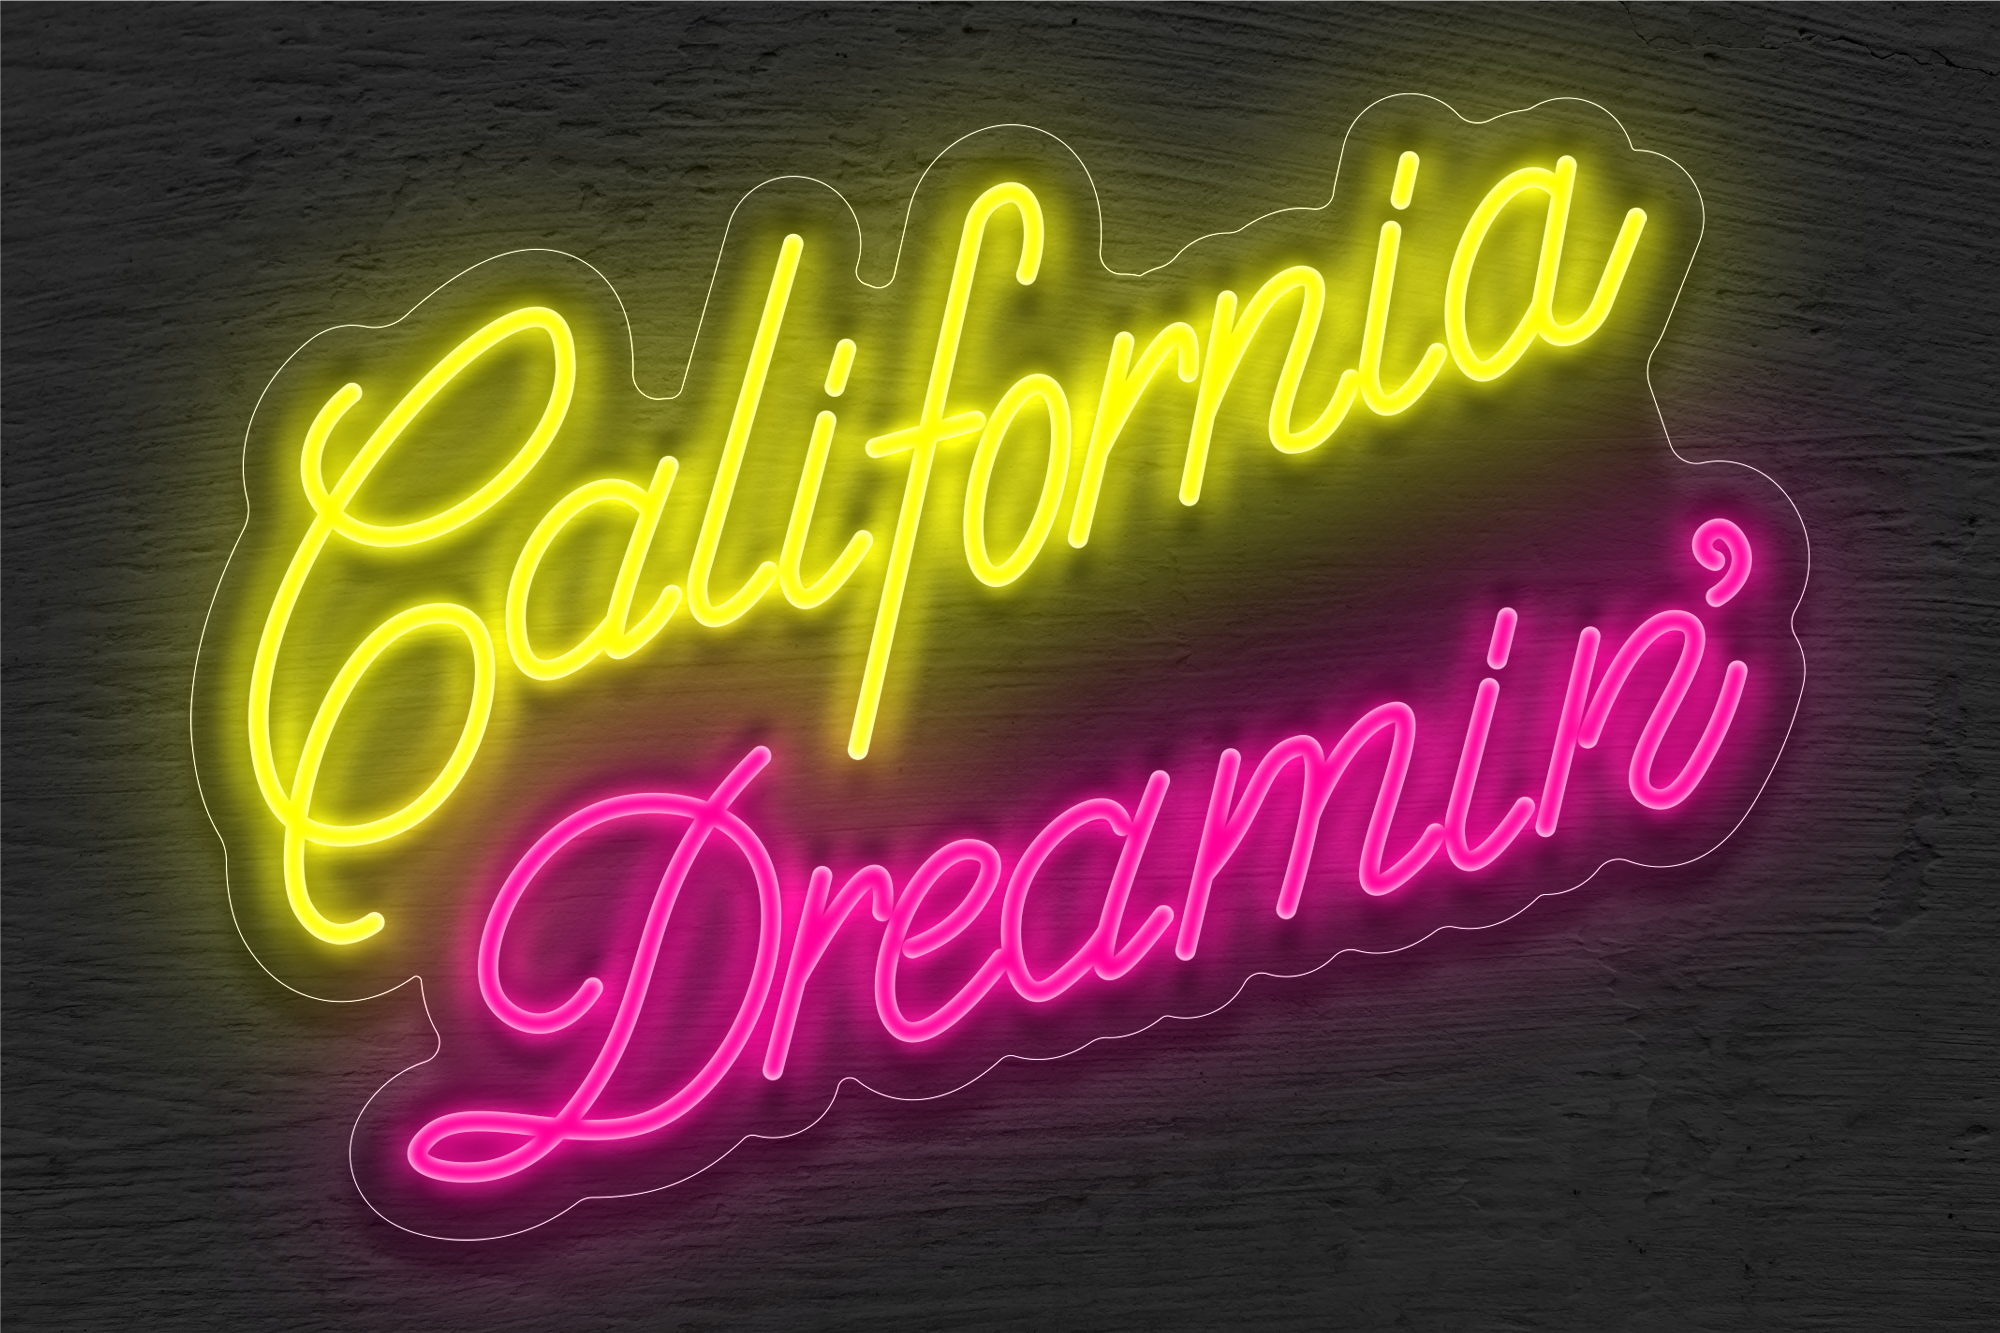 California Dreaming Neon Signcalifornia Dreaming Neon 